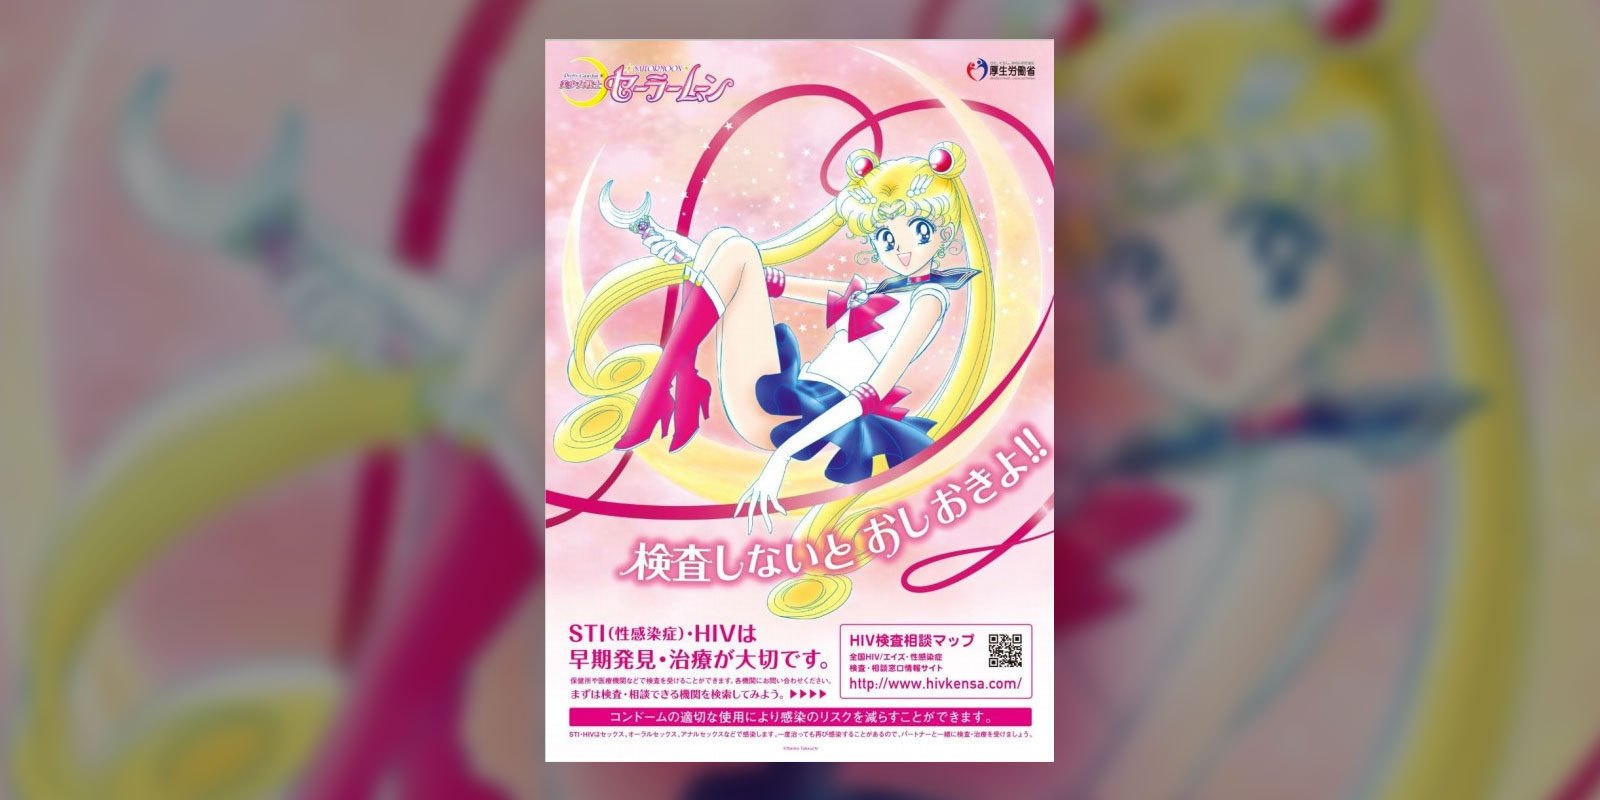 Condones de 'Sailor Moon' para prevenir enfermedades de transmisión sexual